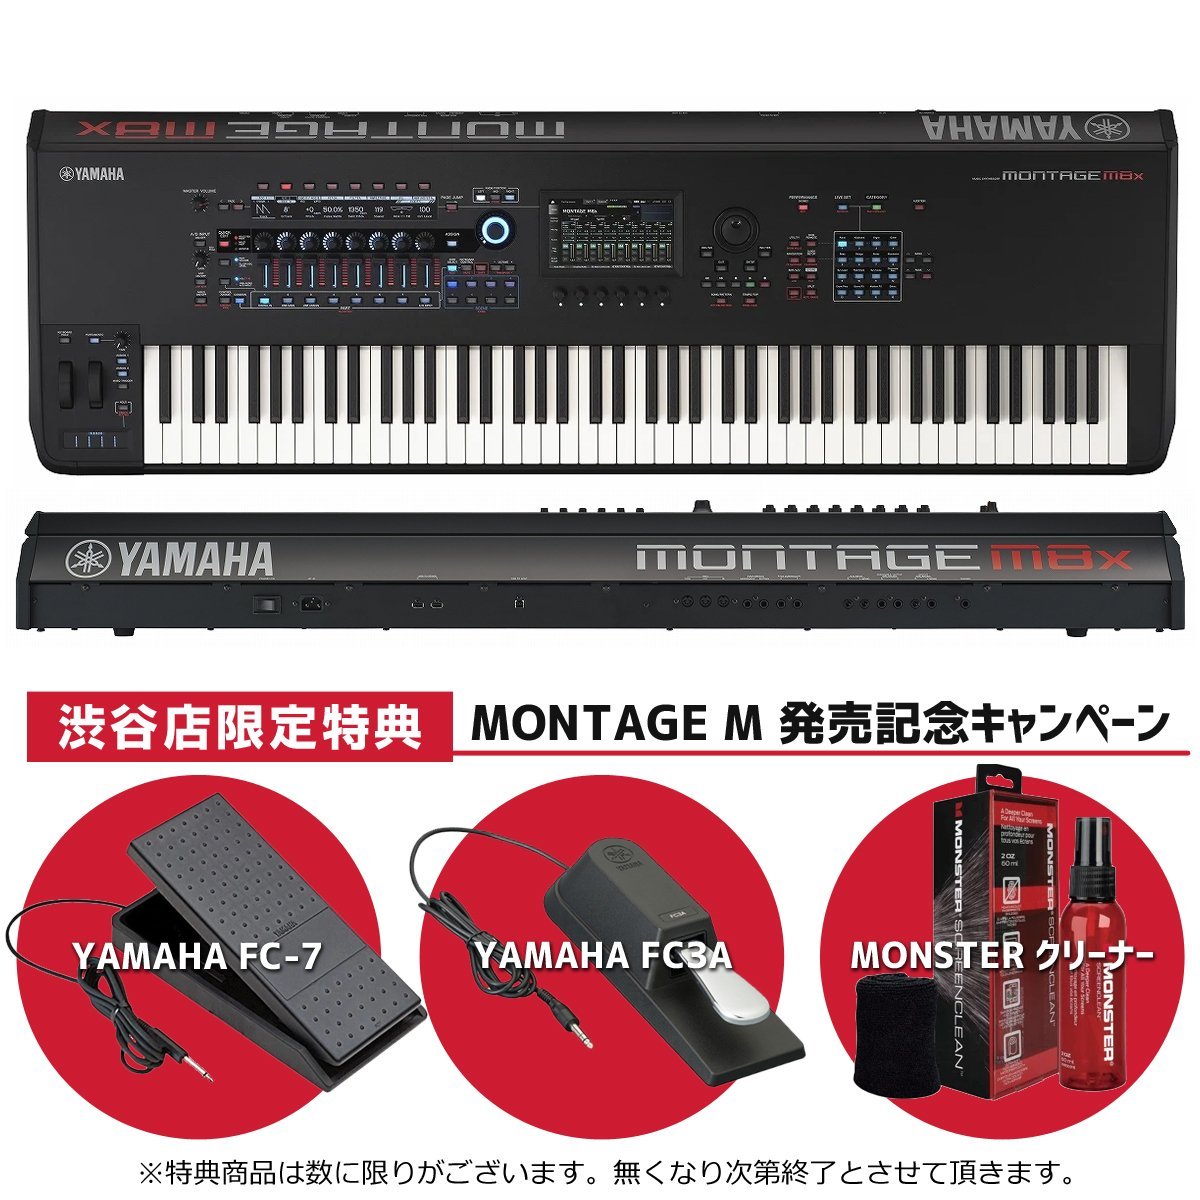 YAMAHA MONTAGE M8X 88鍵 GEX鍵盤 【渋谷店】《予約注文/納期未定